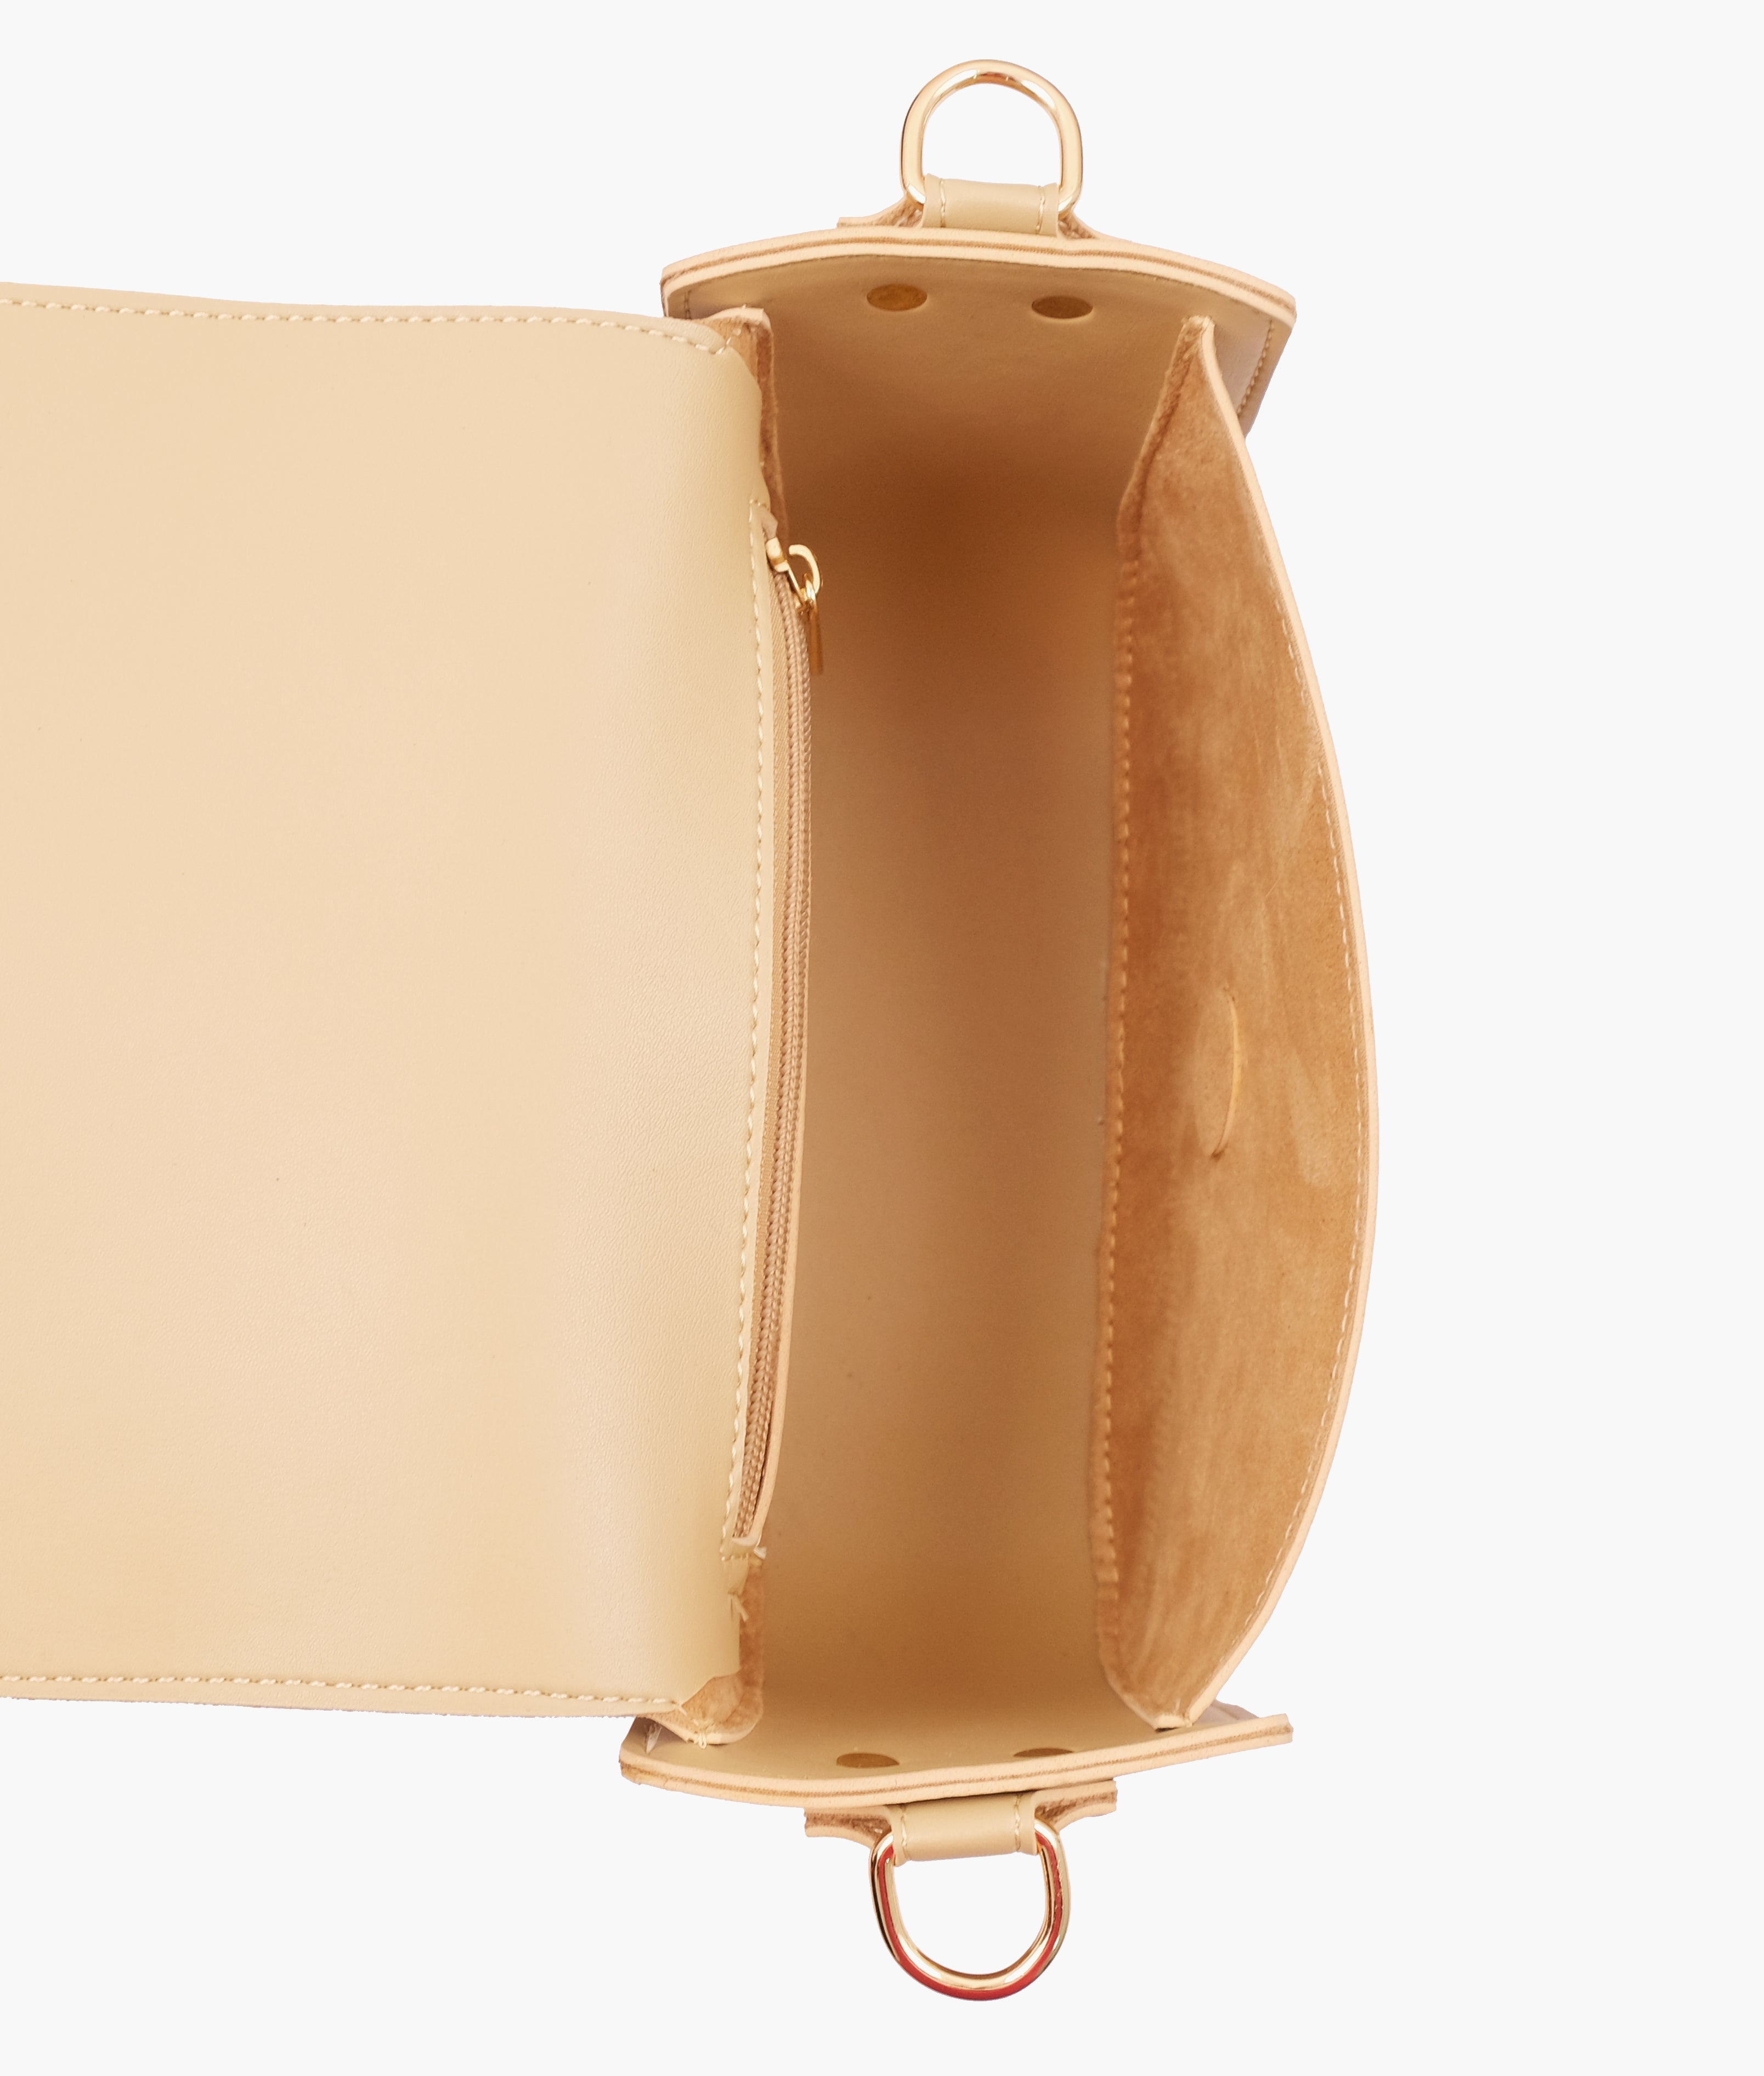 Off-white saddle buckle bag